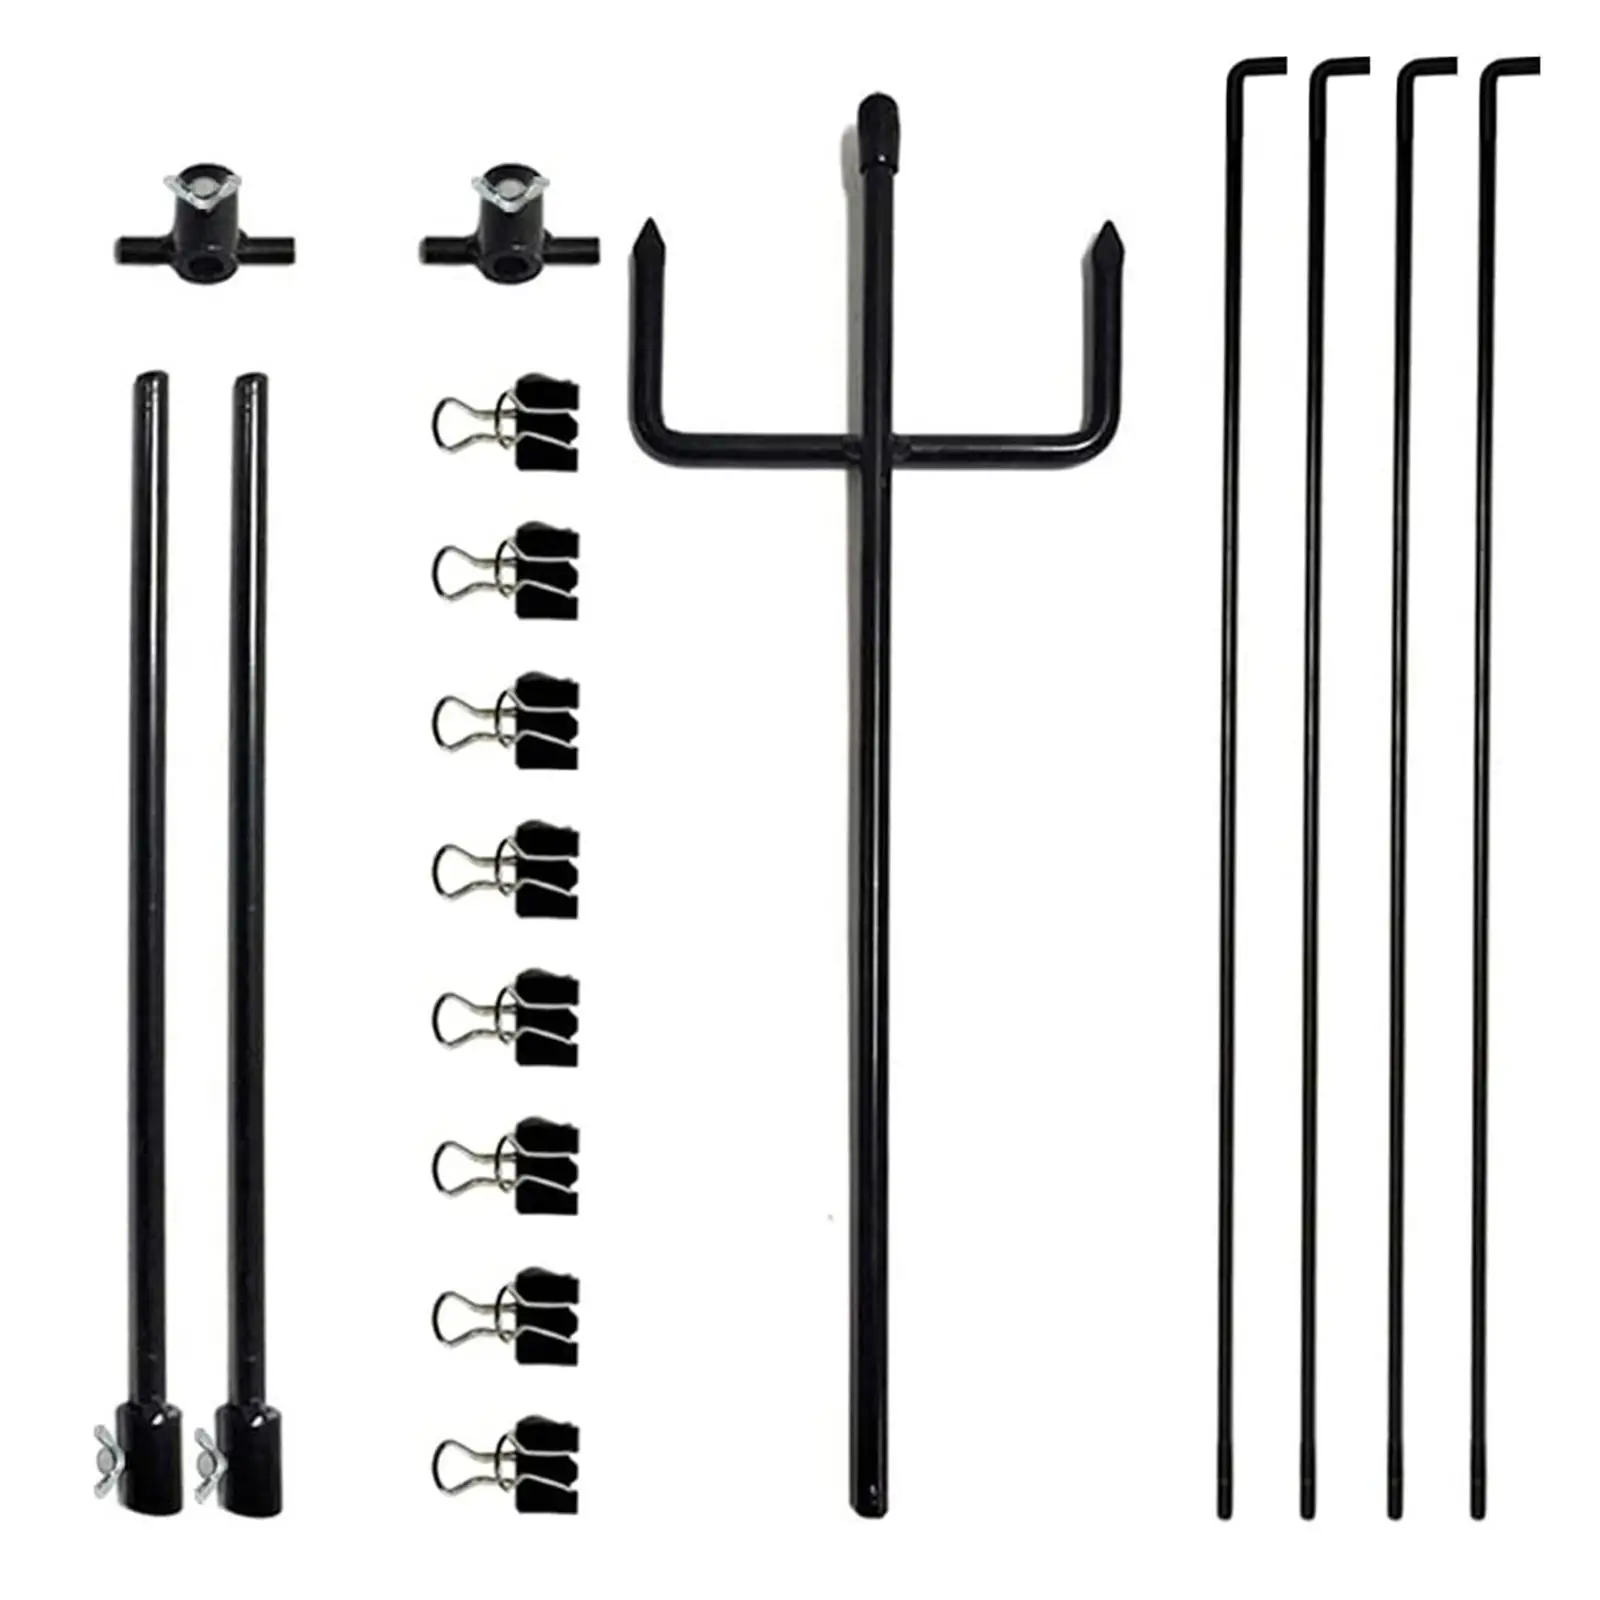 Target Stand Holder Range Practice Sport Access Brackets Detachable for Range Practice Steel T Shape Target Stand Base Archery